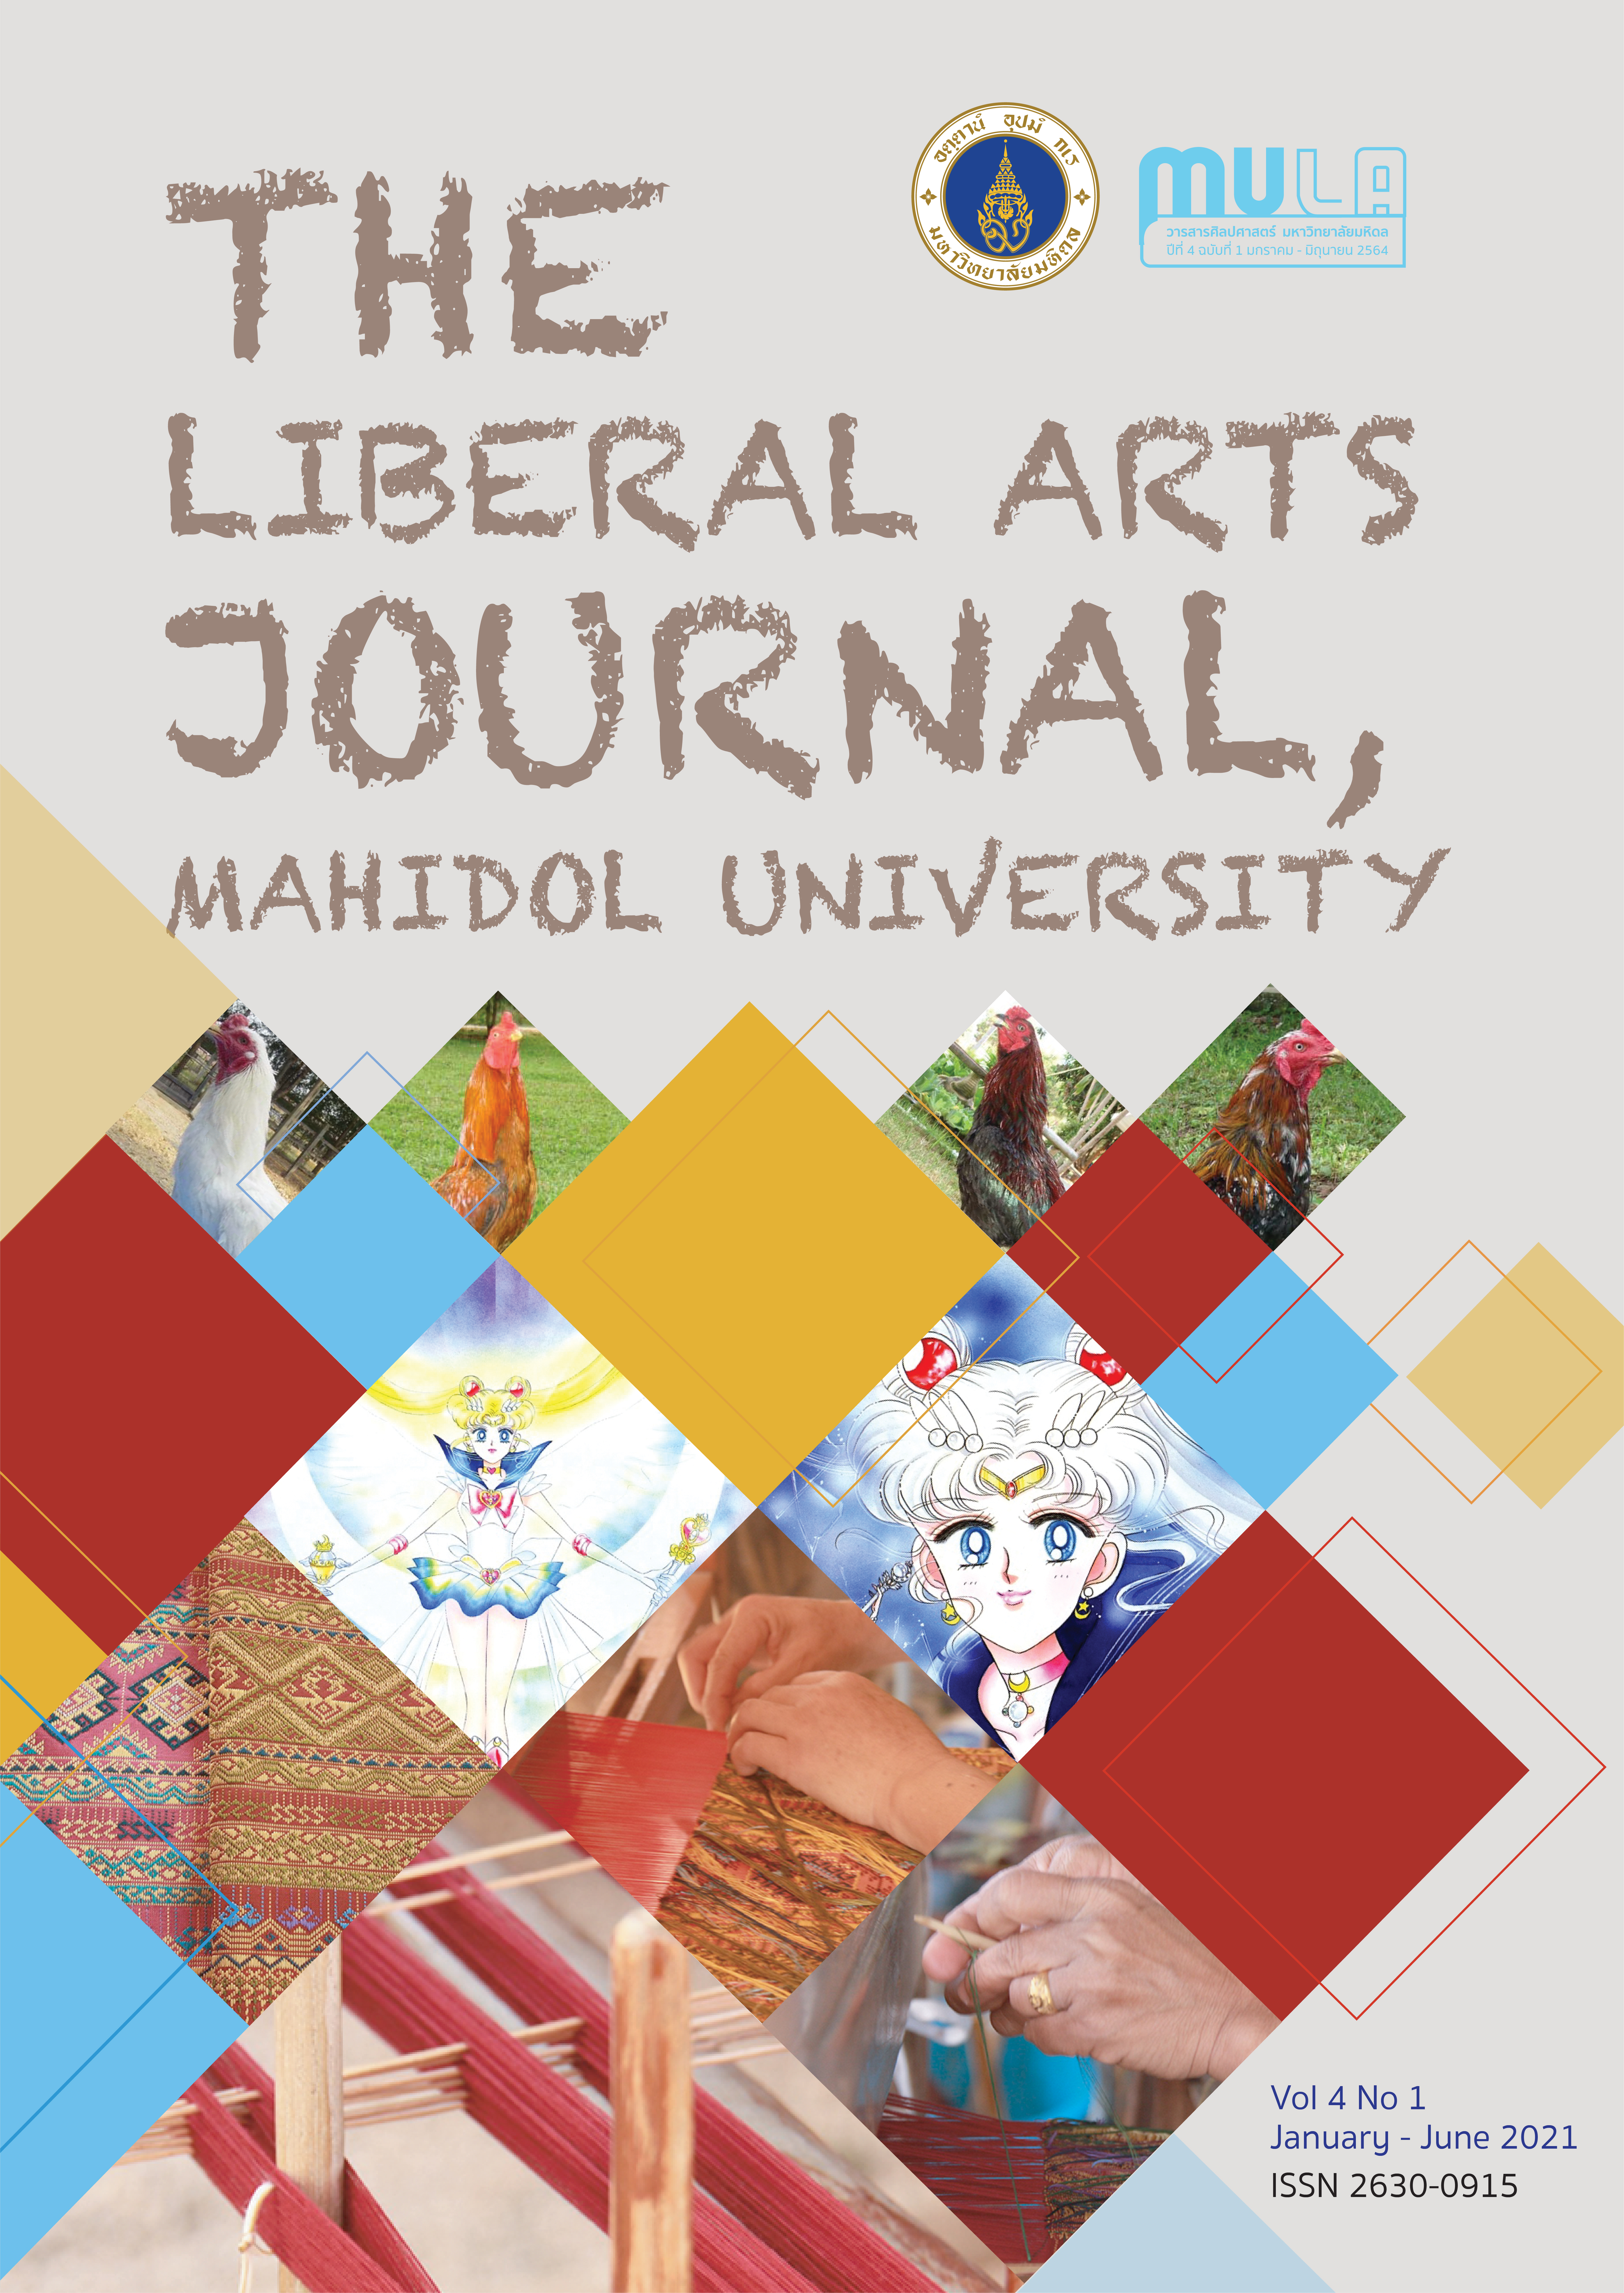 					View Vol. 4 No. 1 (2021): The Liberal Arts Journal, Mahidol University
				